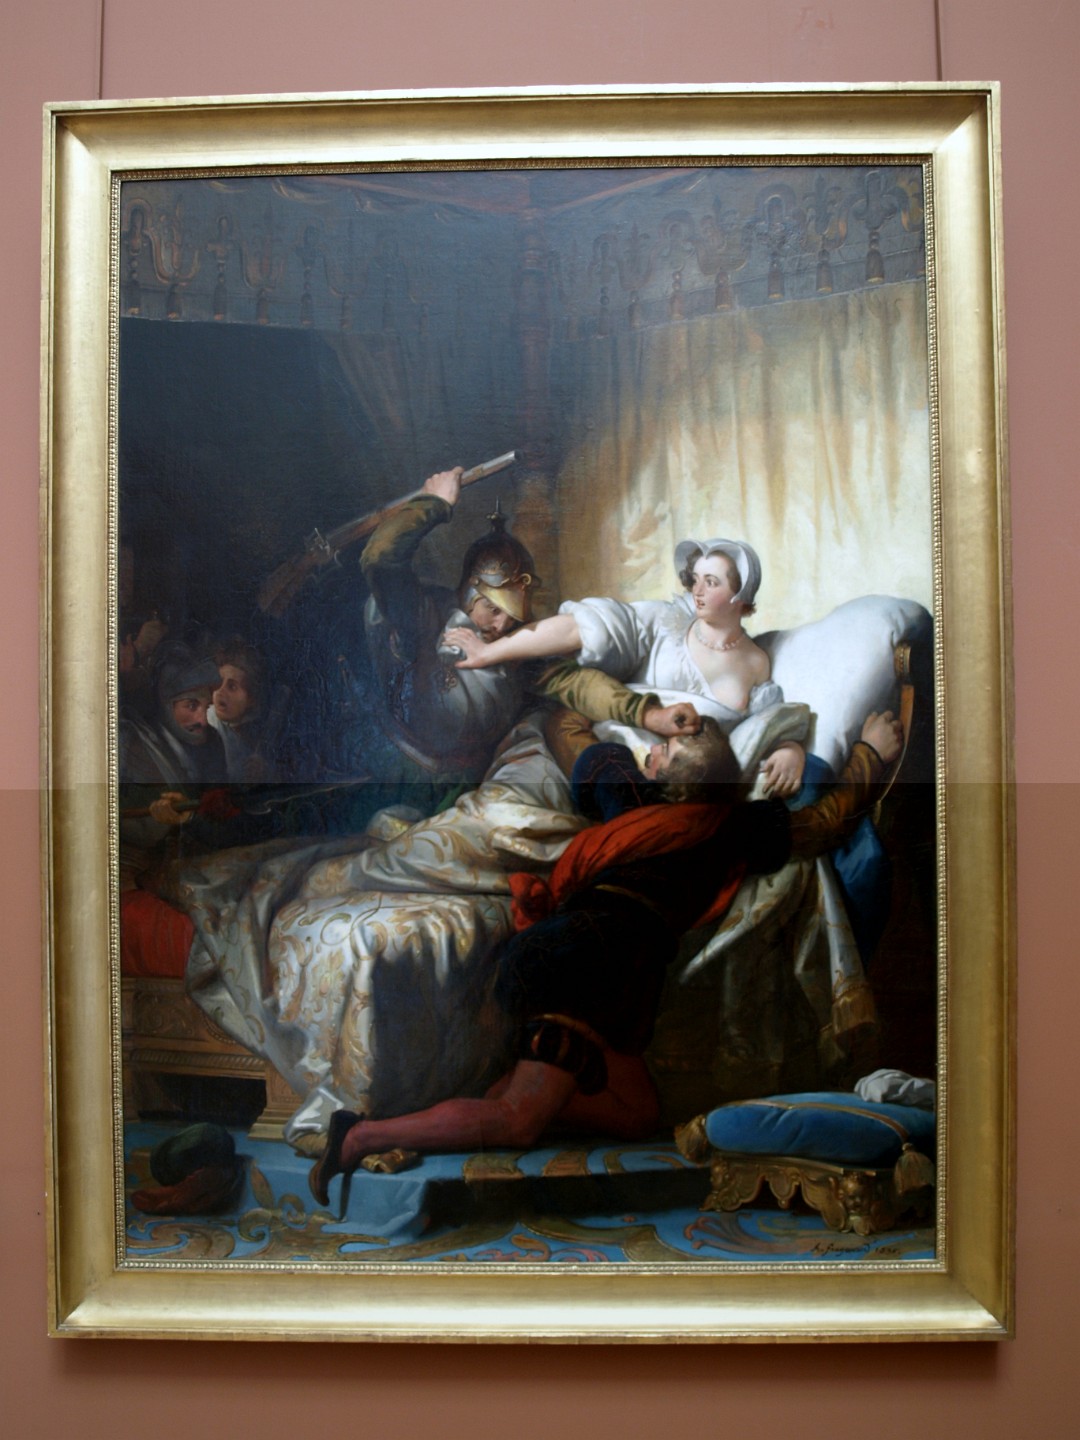 Scene du Massacre de la Saint-Bathelemy by Alexandre-Evariste Fragonard